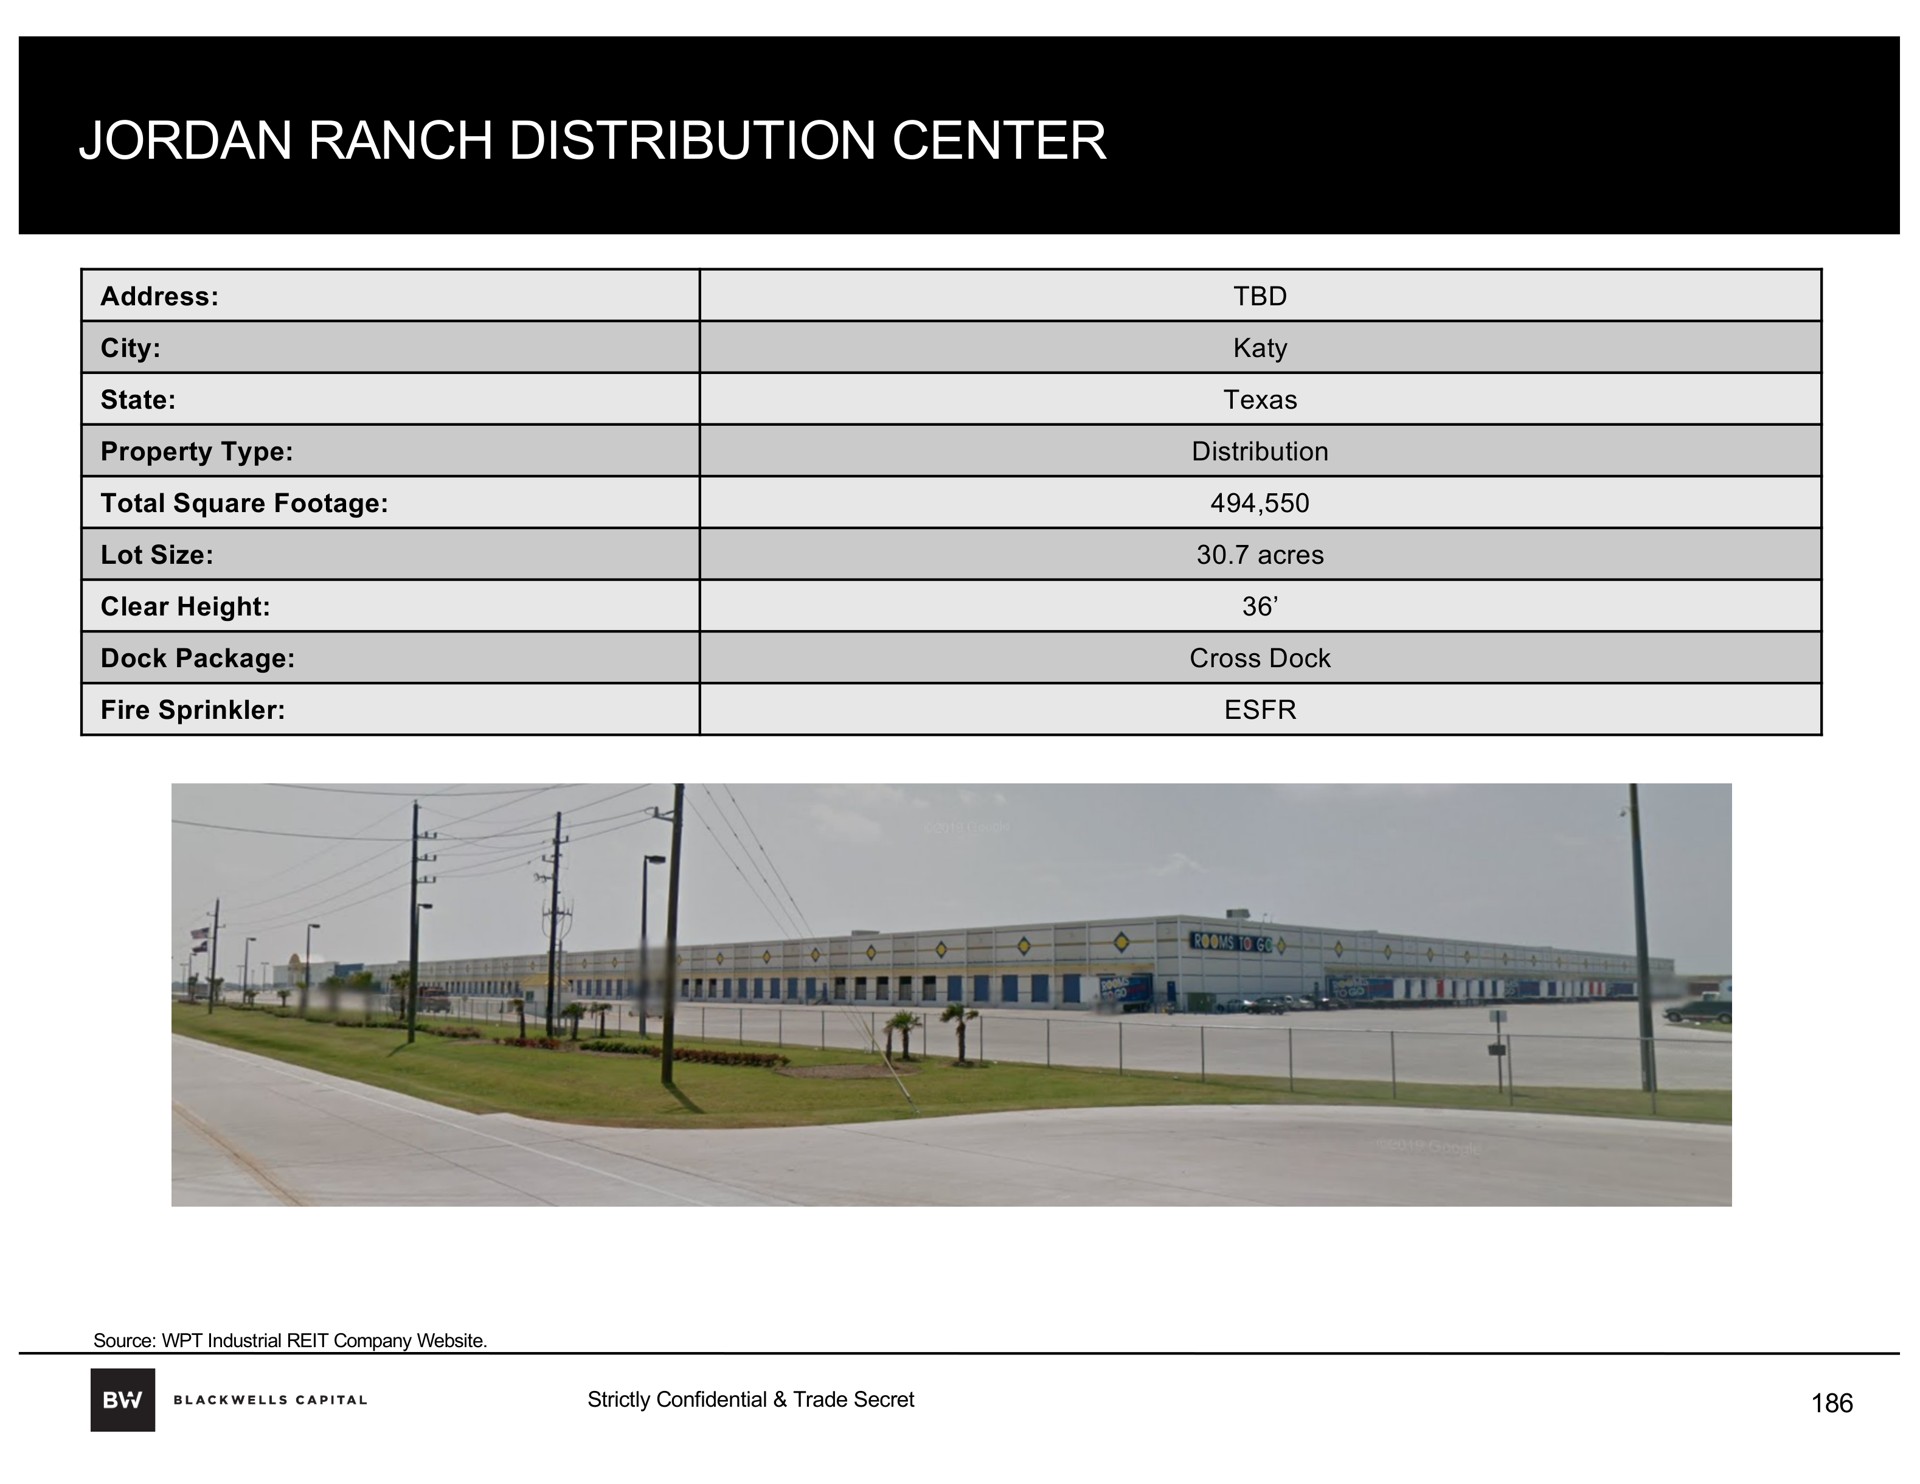 jordan ranch distribution center oes | Blackwells Capital